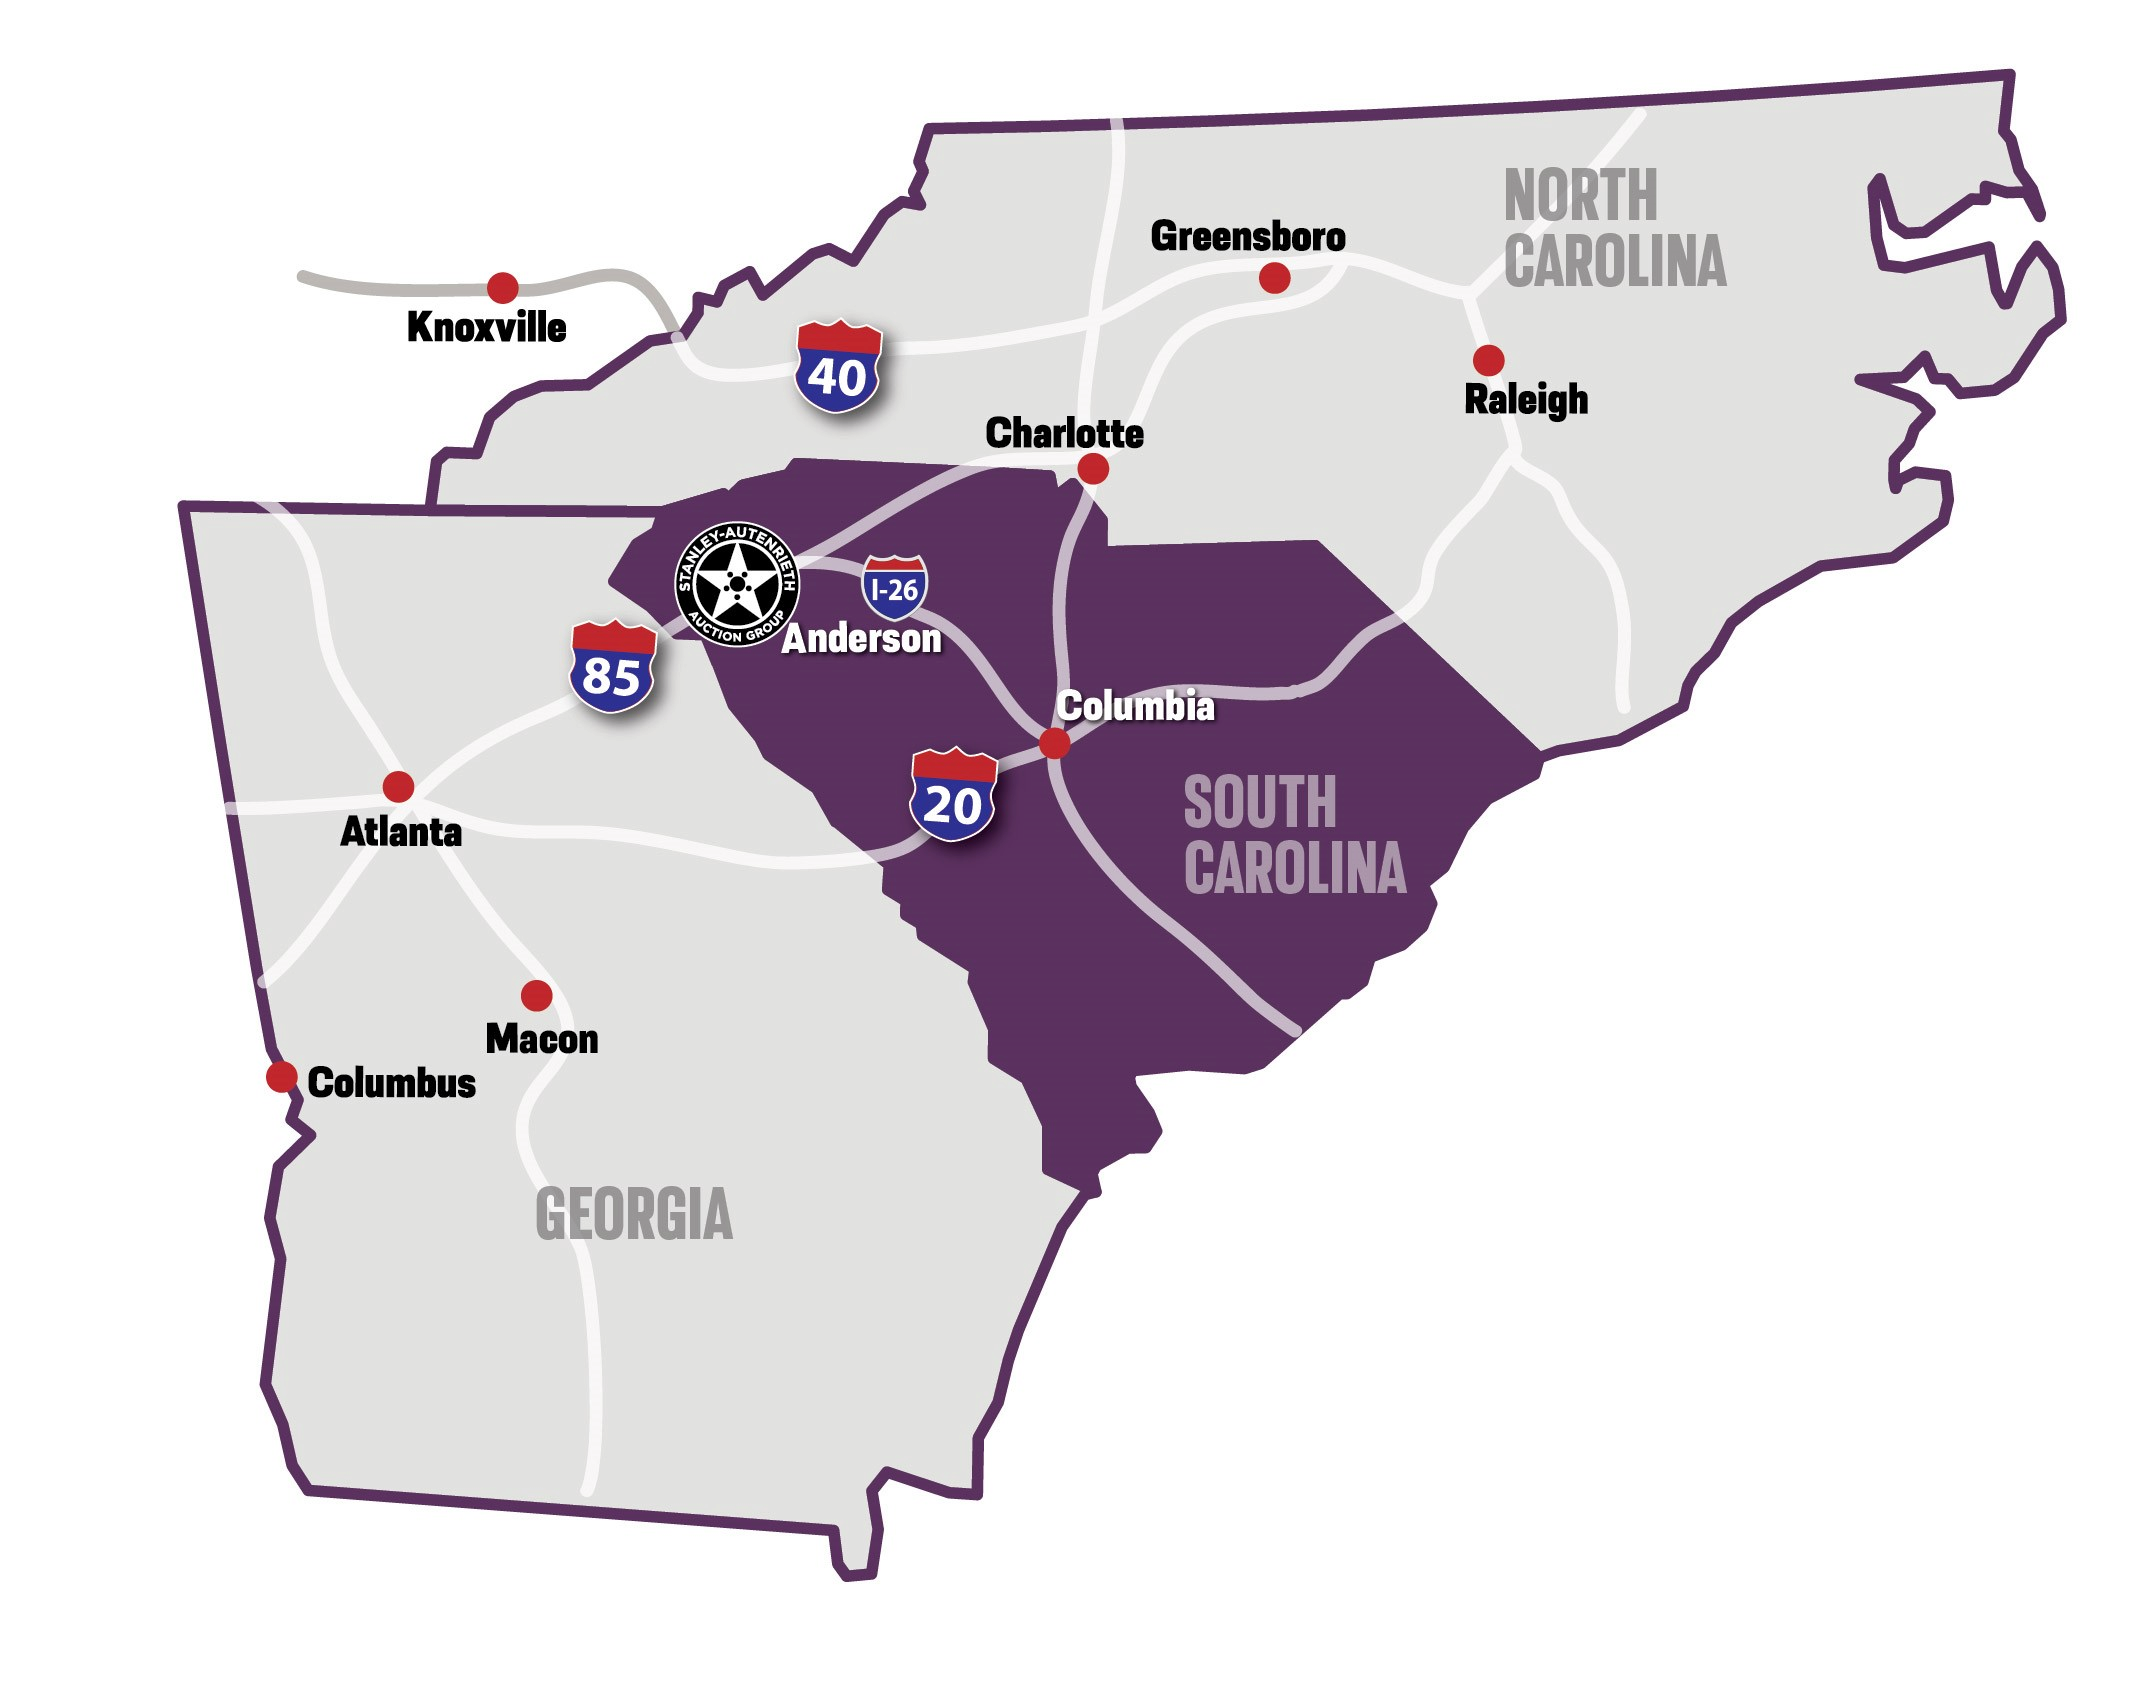 Map of Carolinas and Georgia with Major Highways